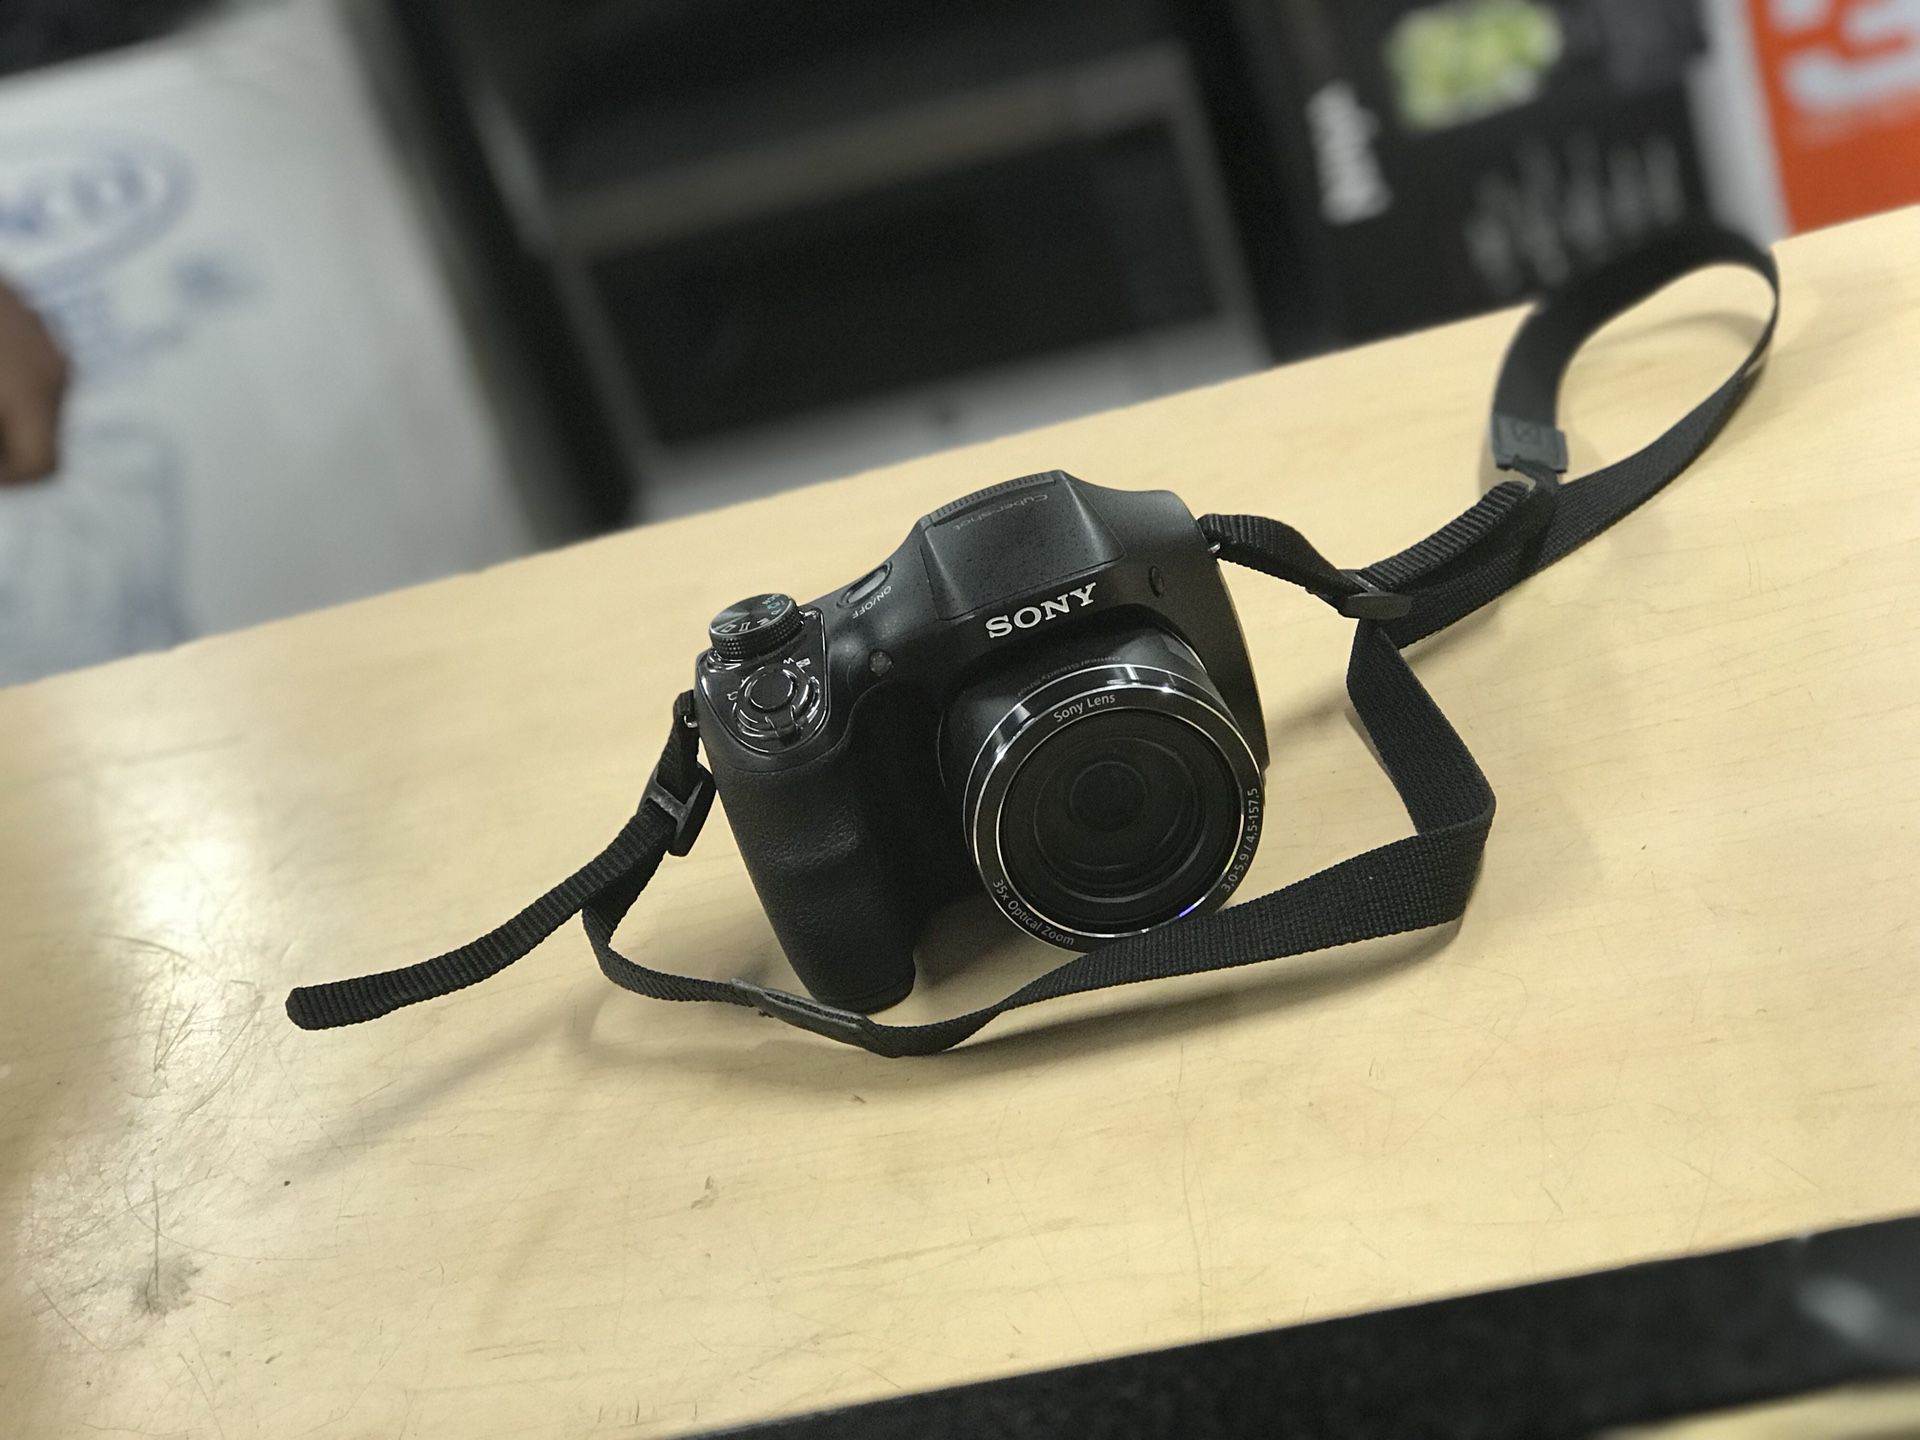 Sony DSCH300/B Digital Camera (Black)